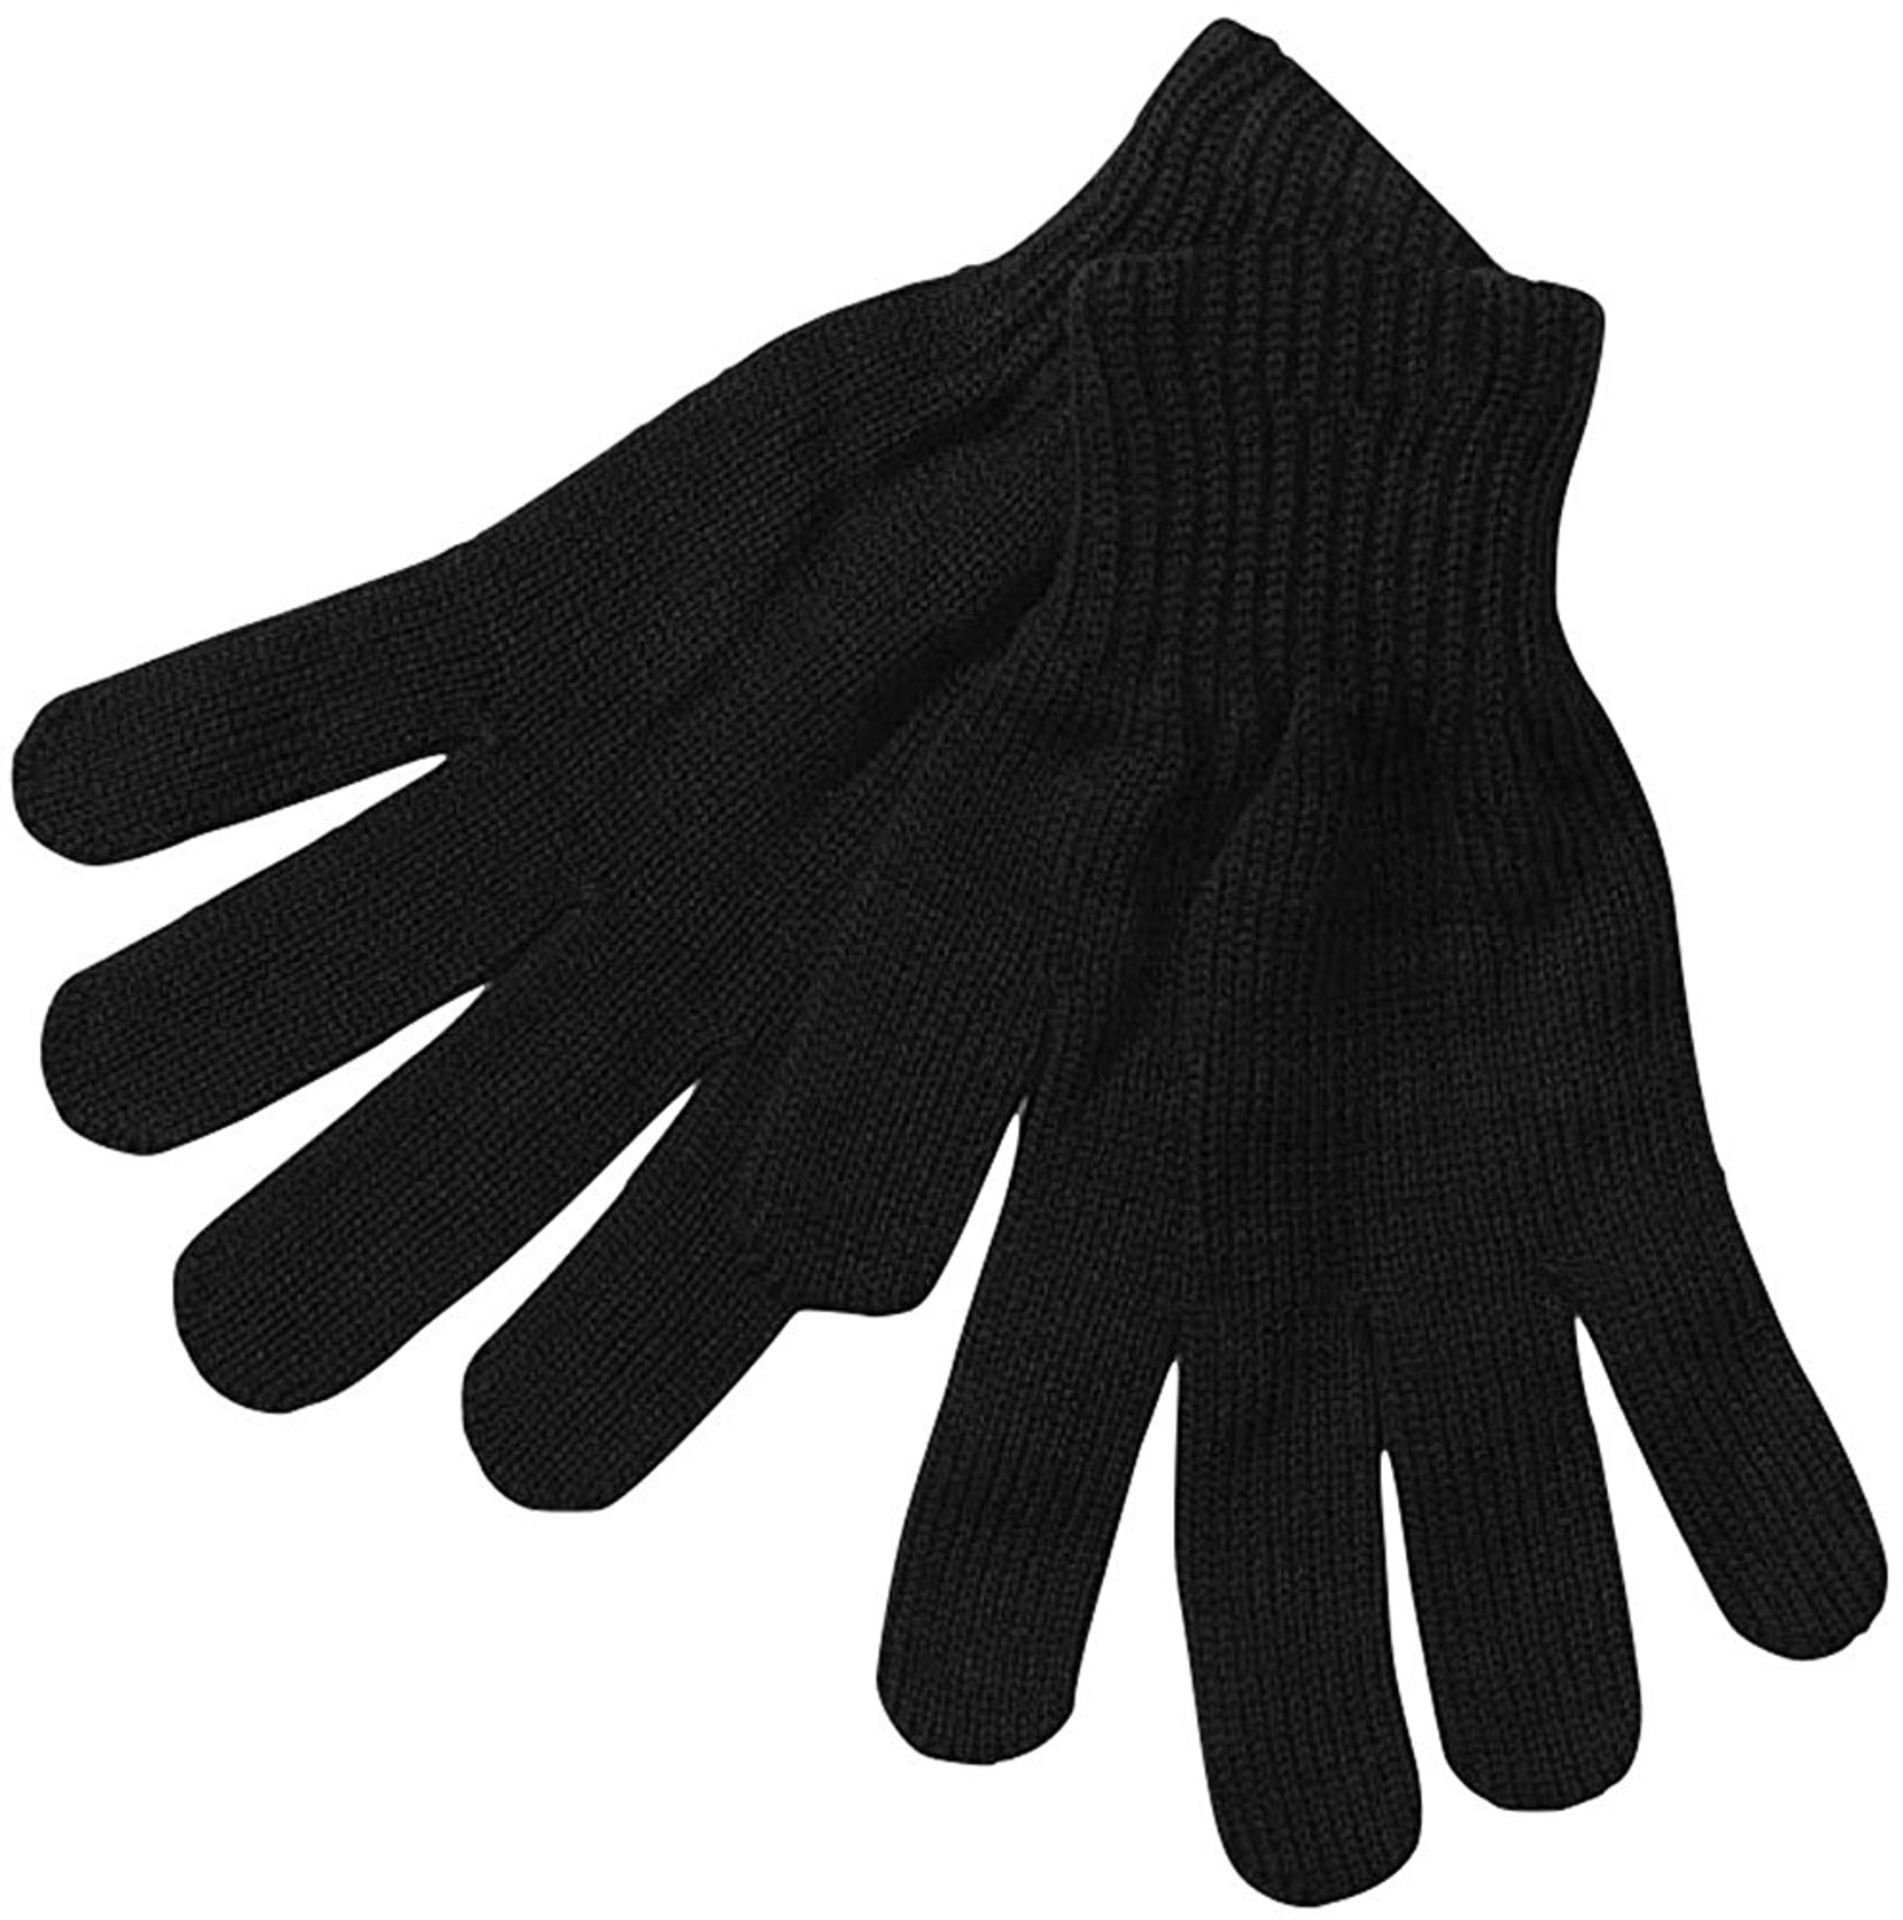 V Brand New Job Lot of Twelve Pairs Mens Black Thermal Lined Winter Gloves RRP £3.99 Per Pair X 2